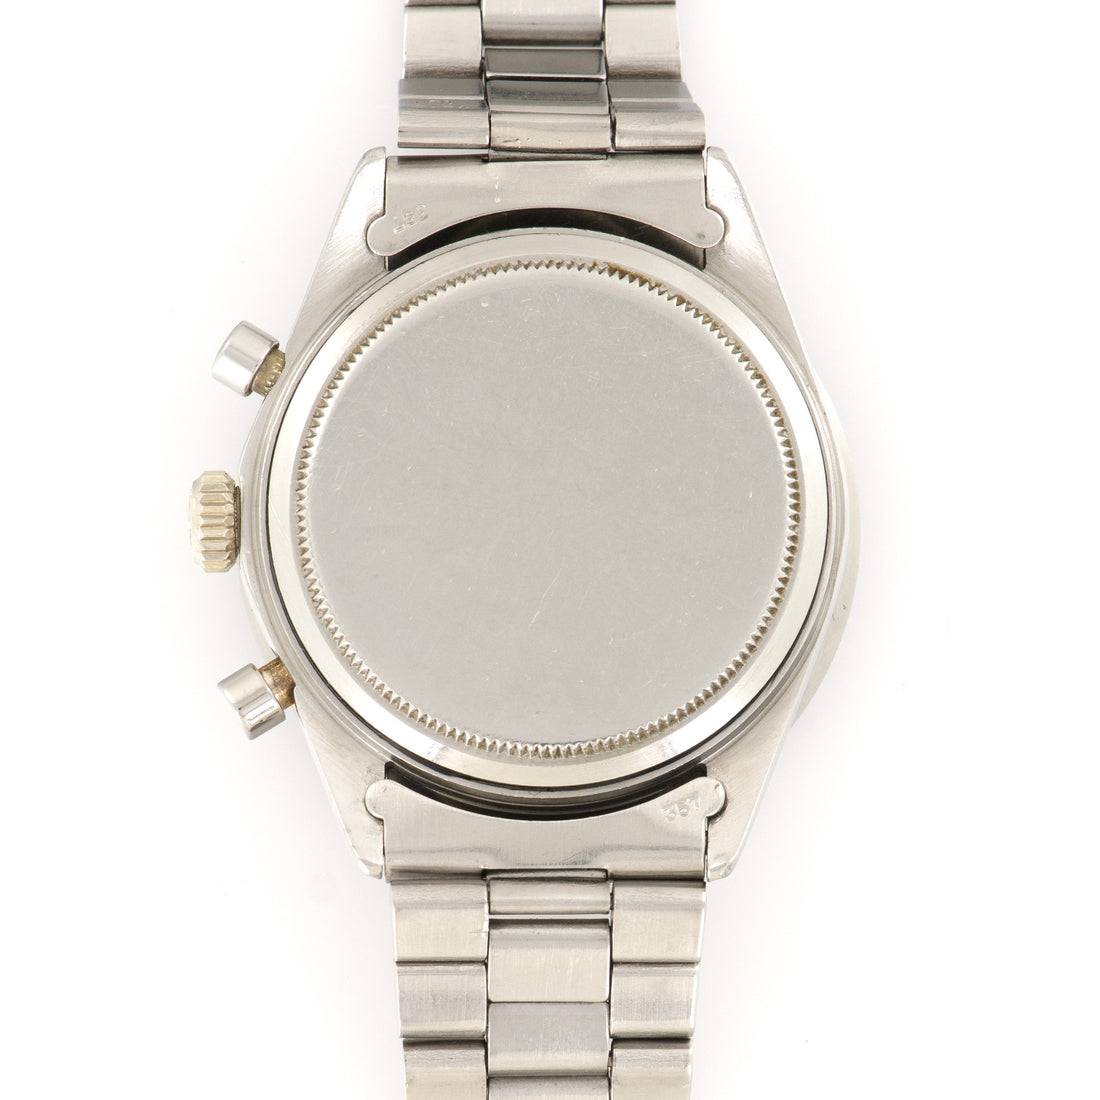 Rolex Cosmograph Daytona Paul Newman Watch Ref. 6241